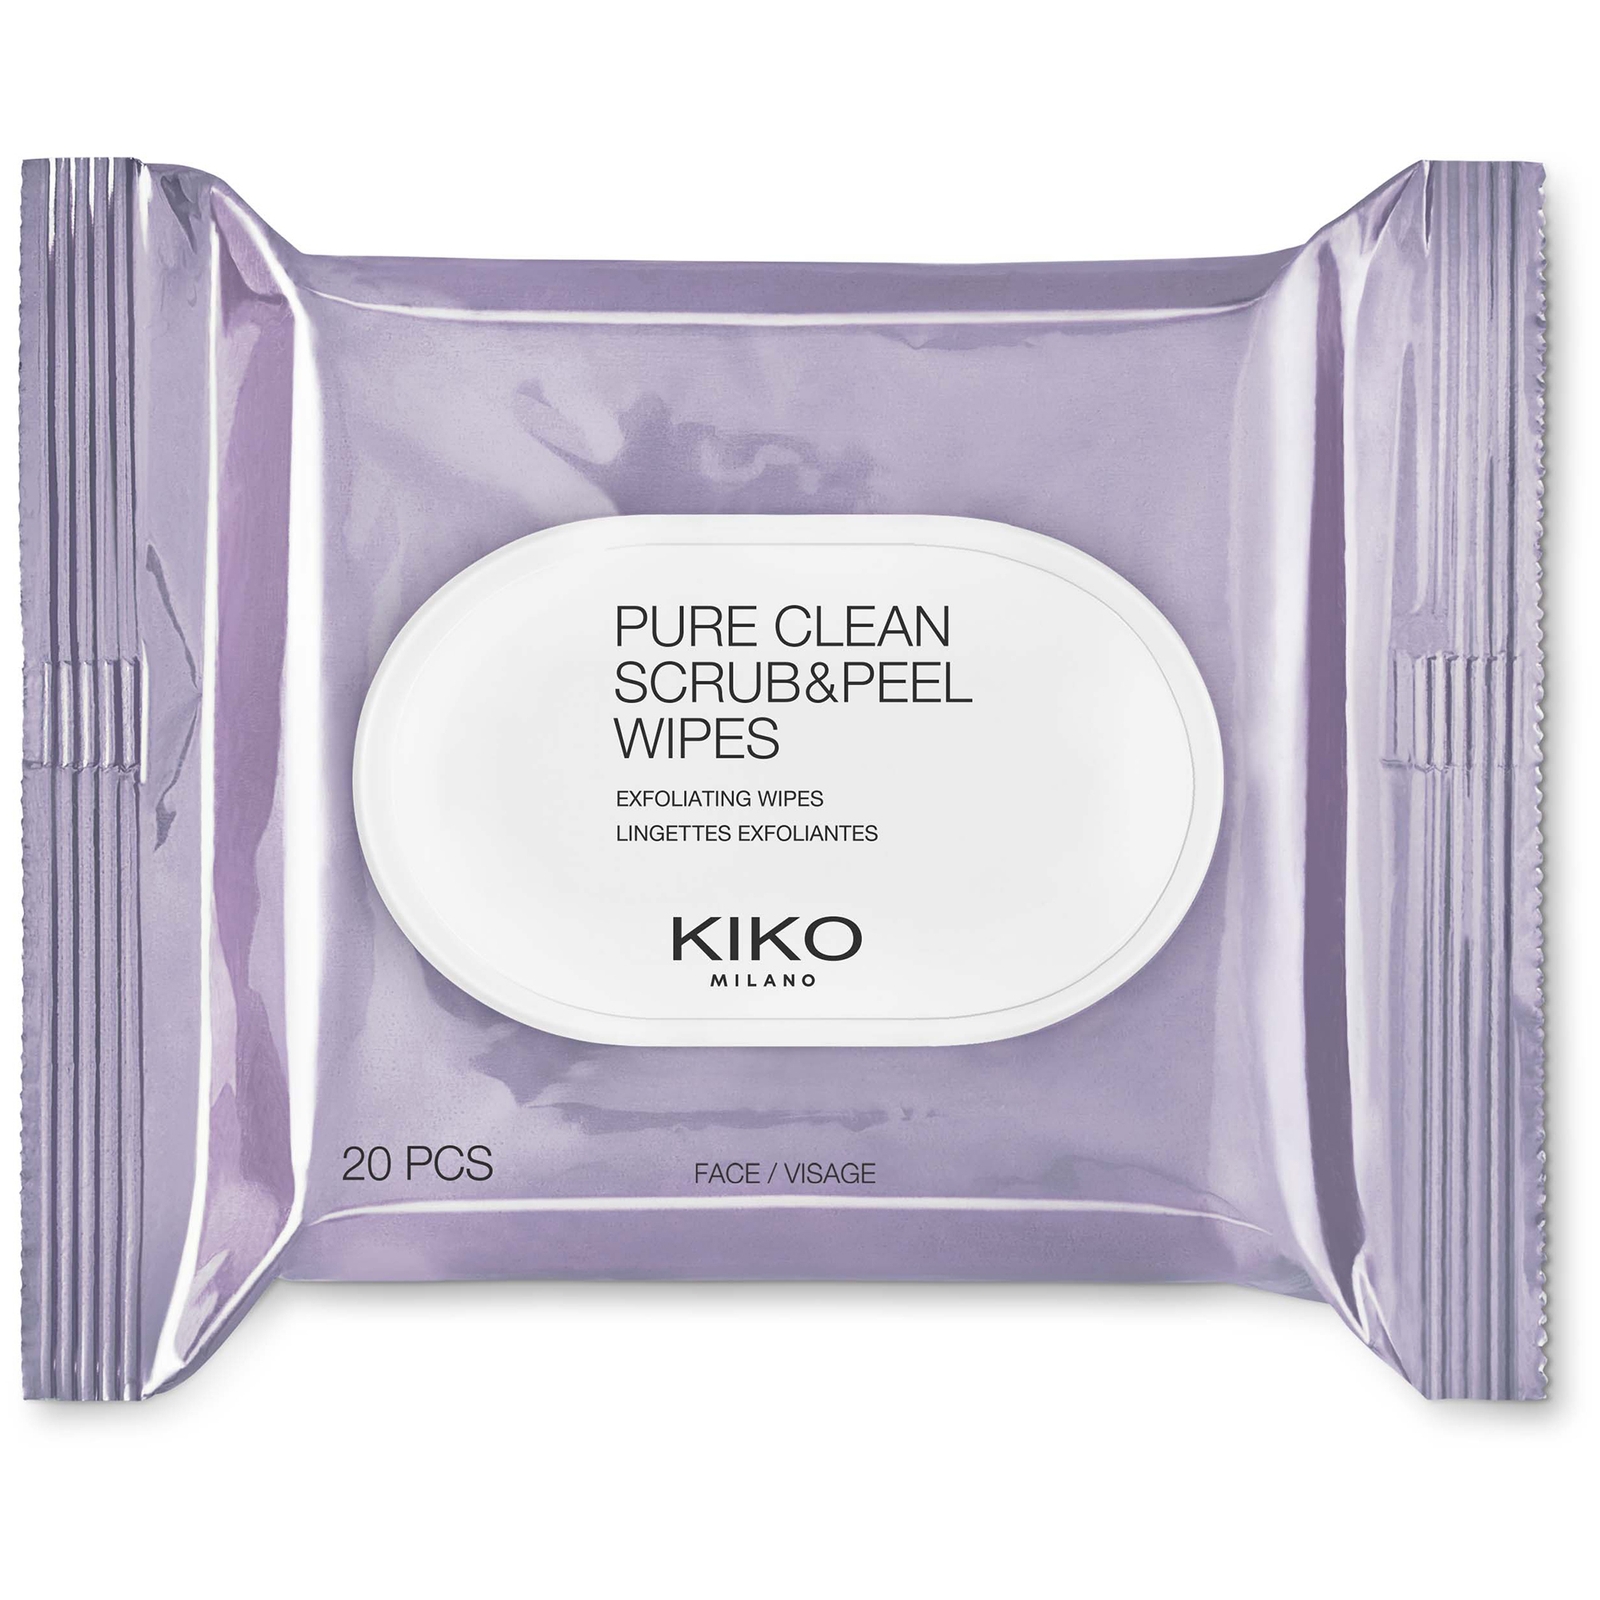 KIKO Milano Pure Clean Scrub & Peel Wipes